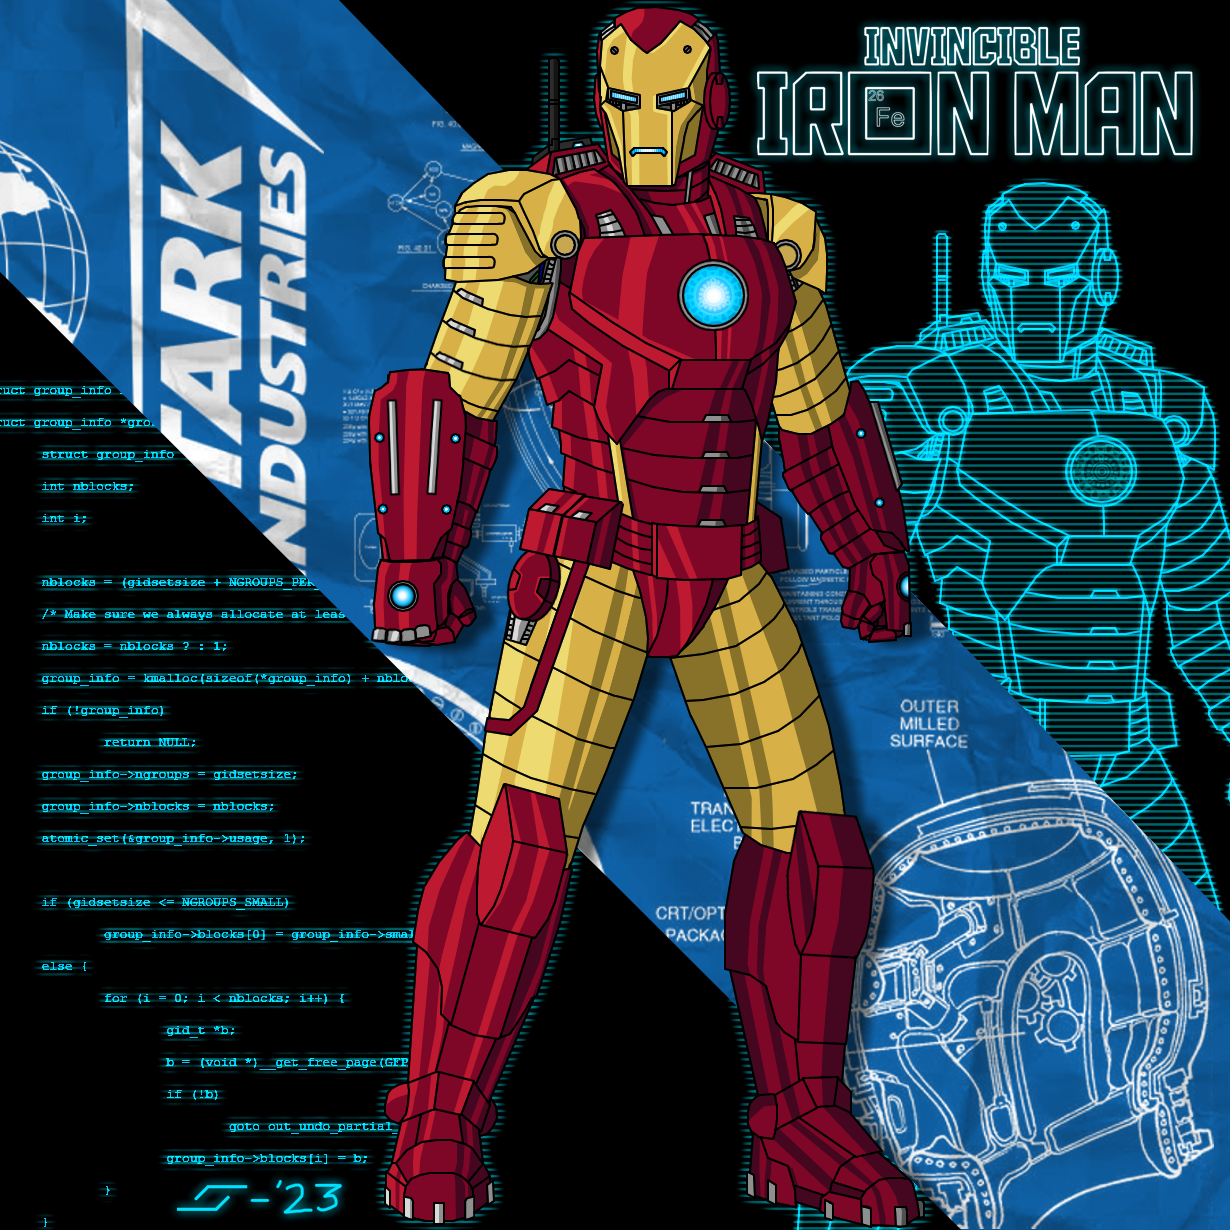 Invincible-iron-man by paulowiki on DeviantArt